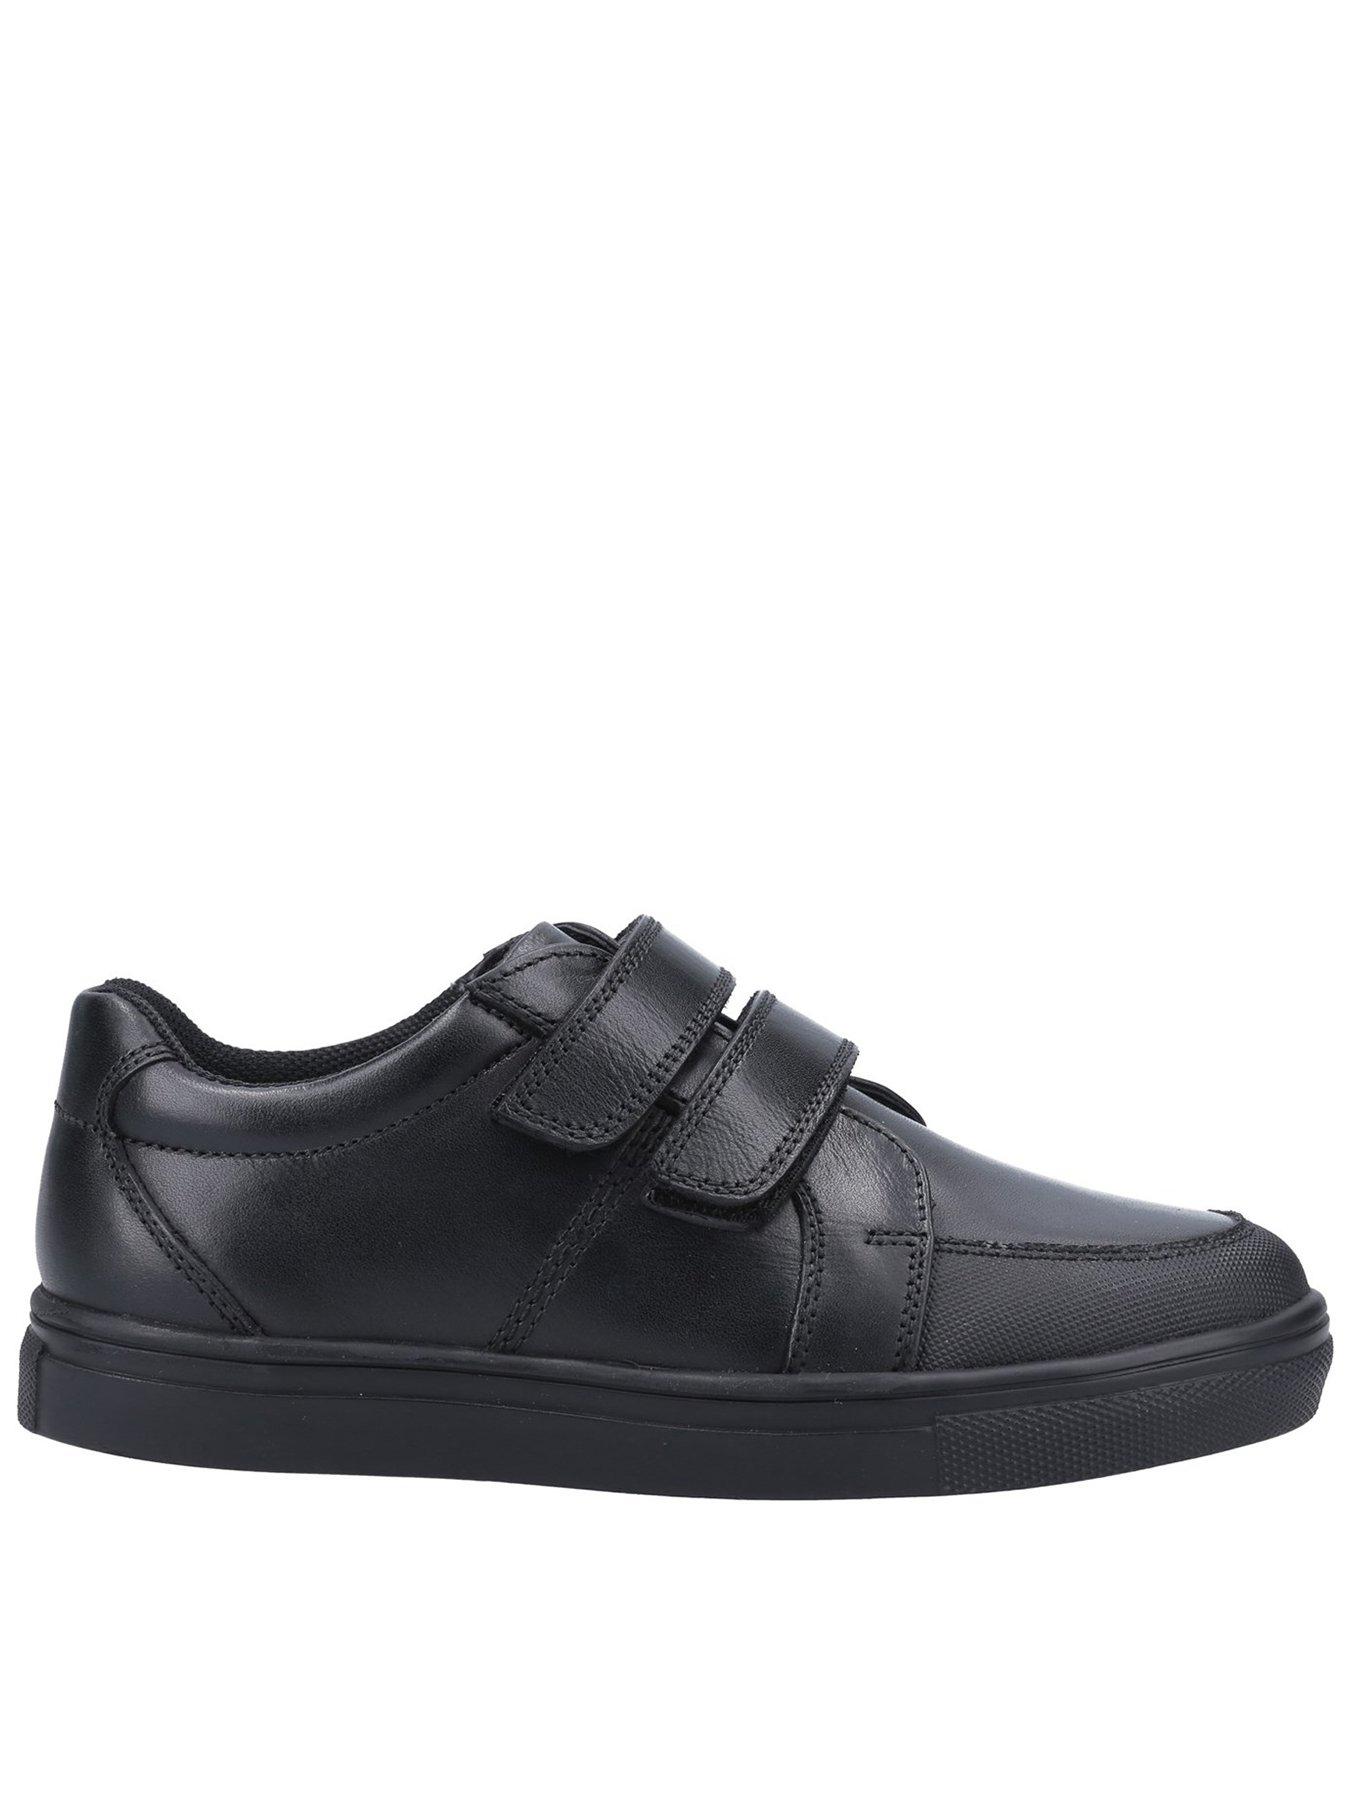 Kids Boys Santos Strap Back To School Shoes - Black